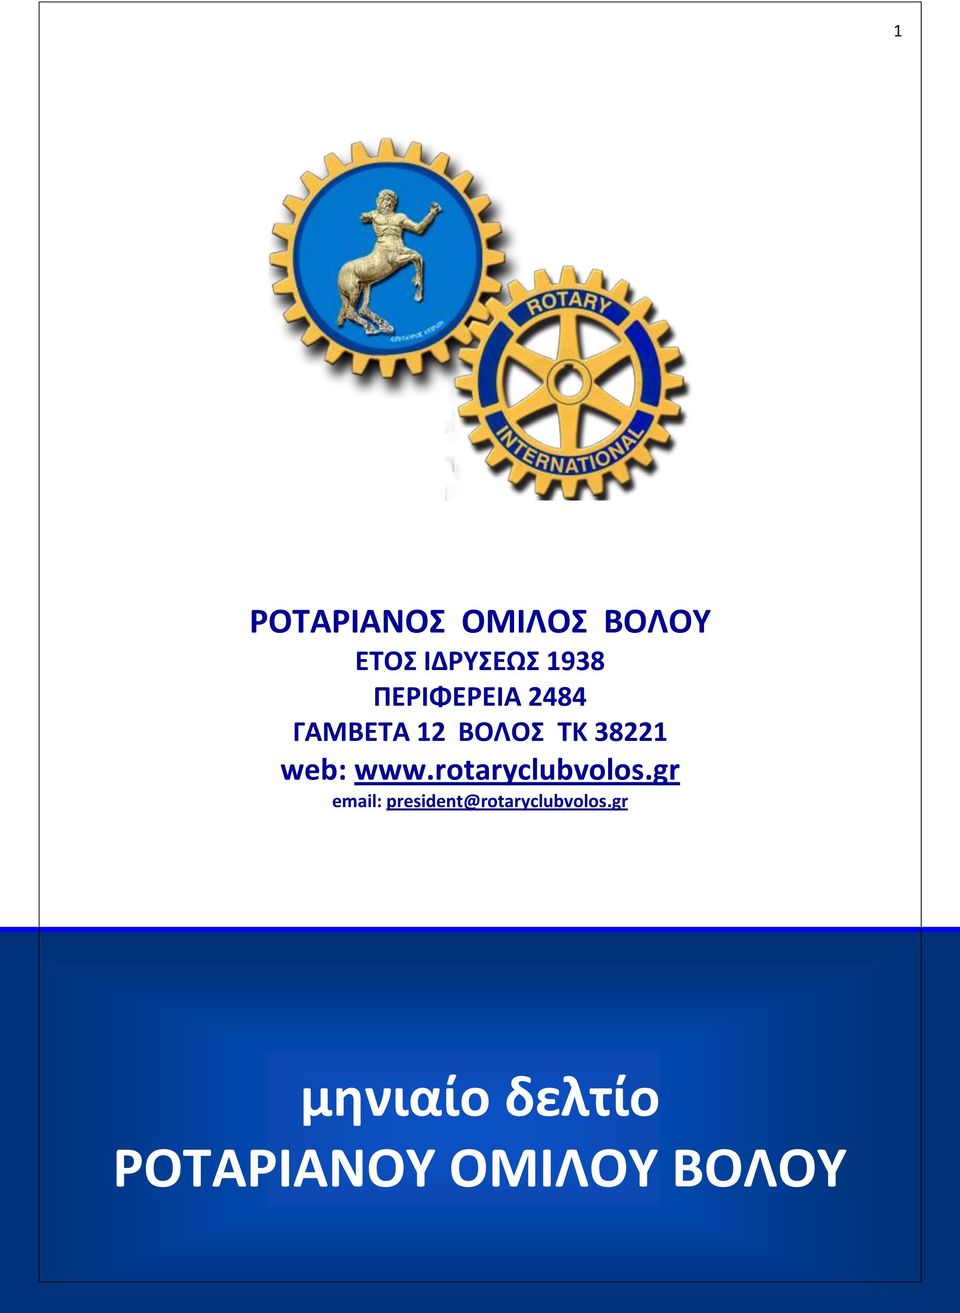 www.rotaryclubvolos.